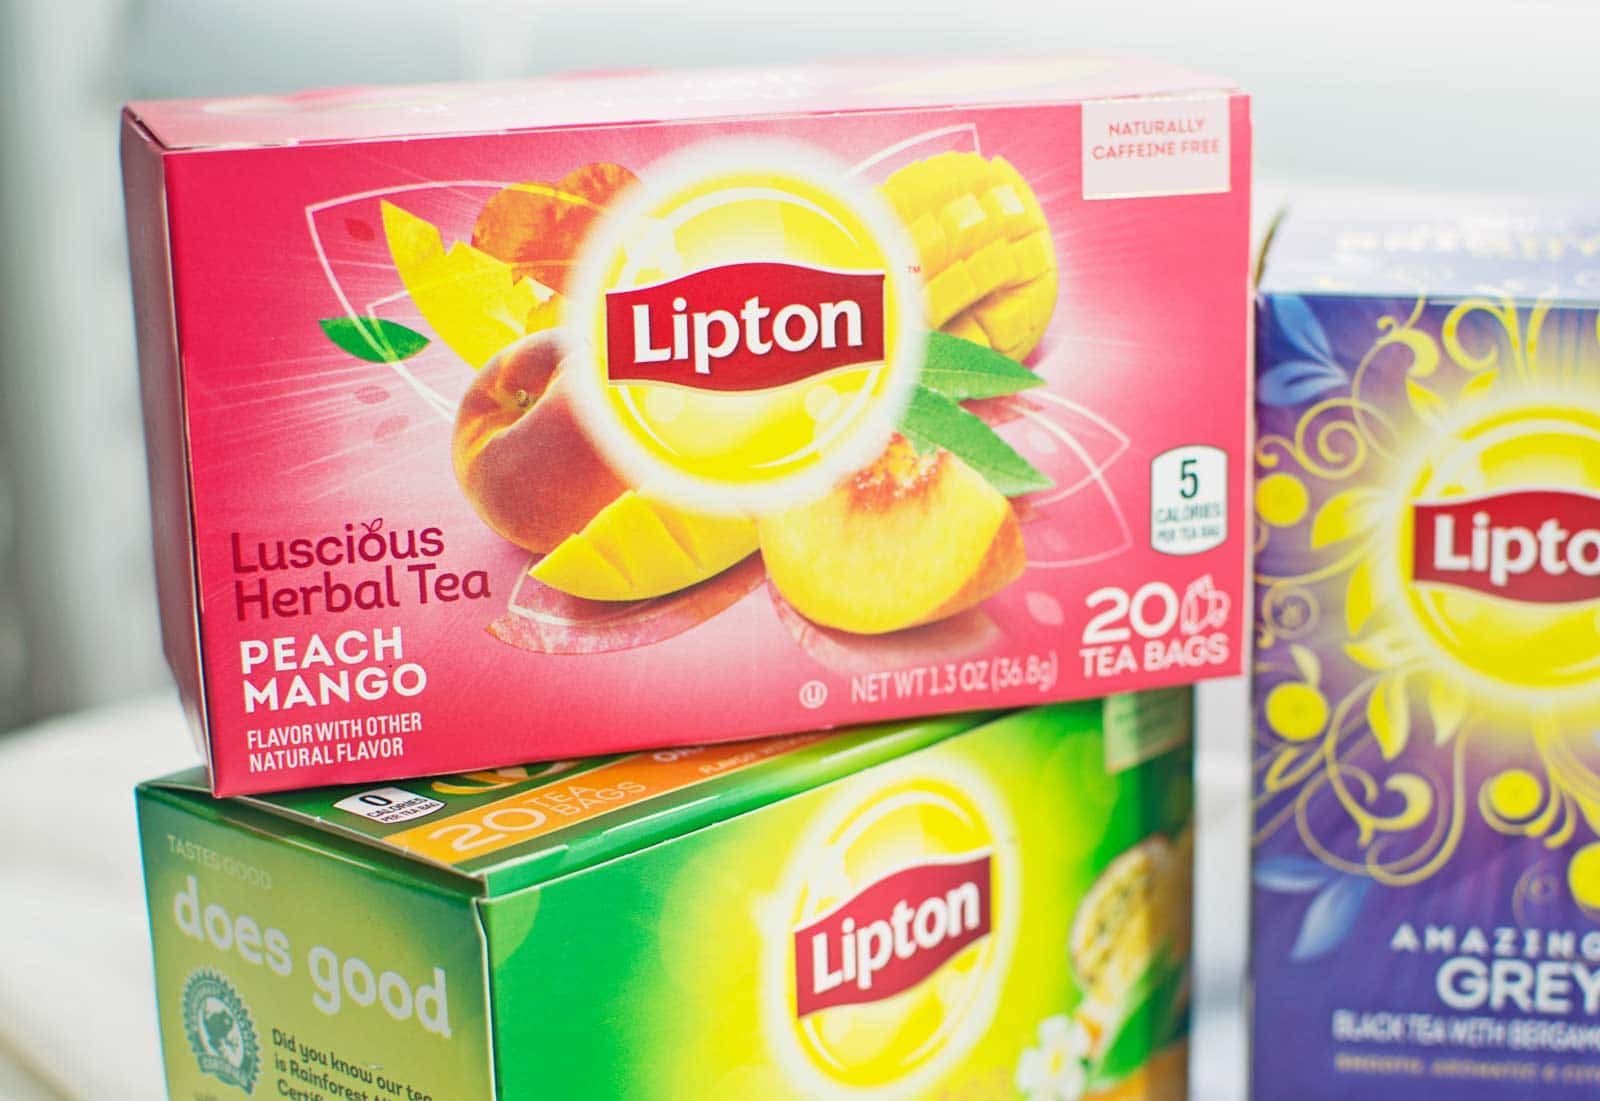 Enjoy Lipton Tea's bold Black & Green Tea Varieties - Find out more @LittleFiggyFood 